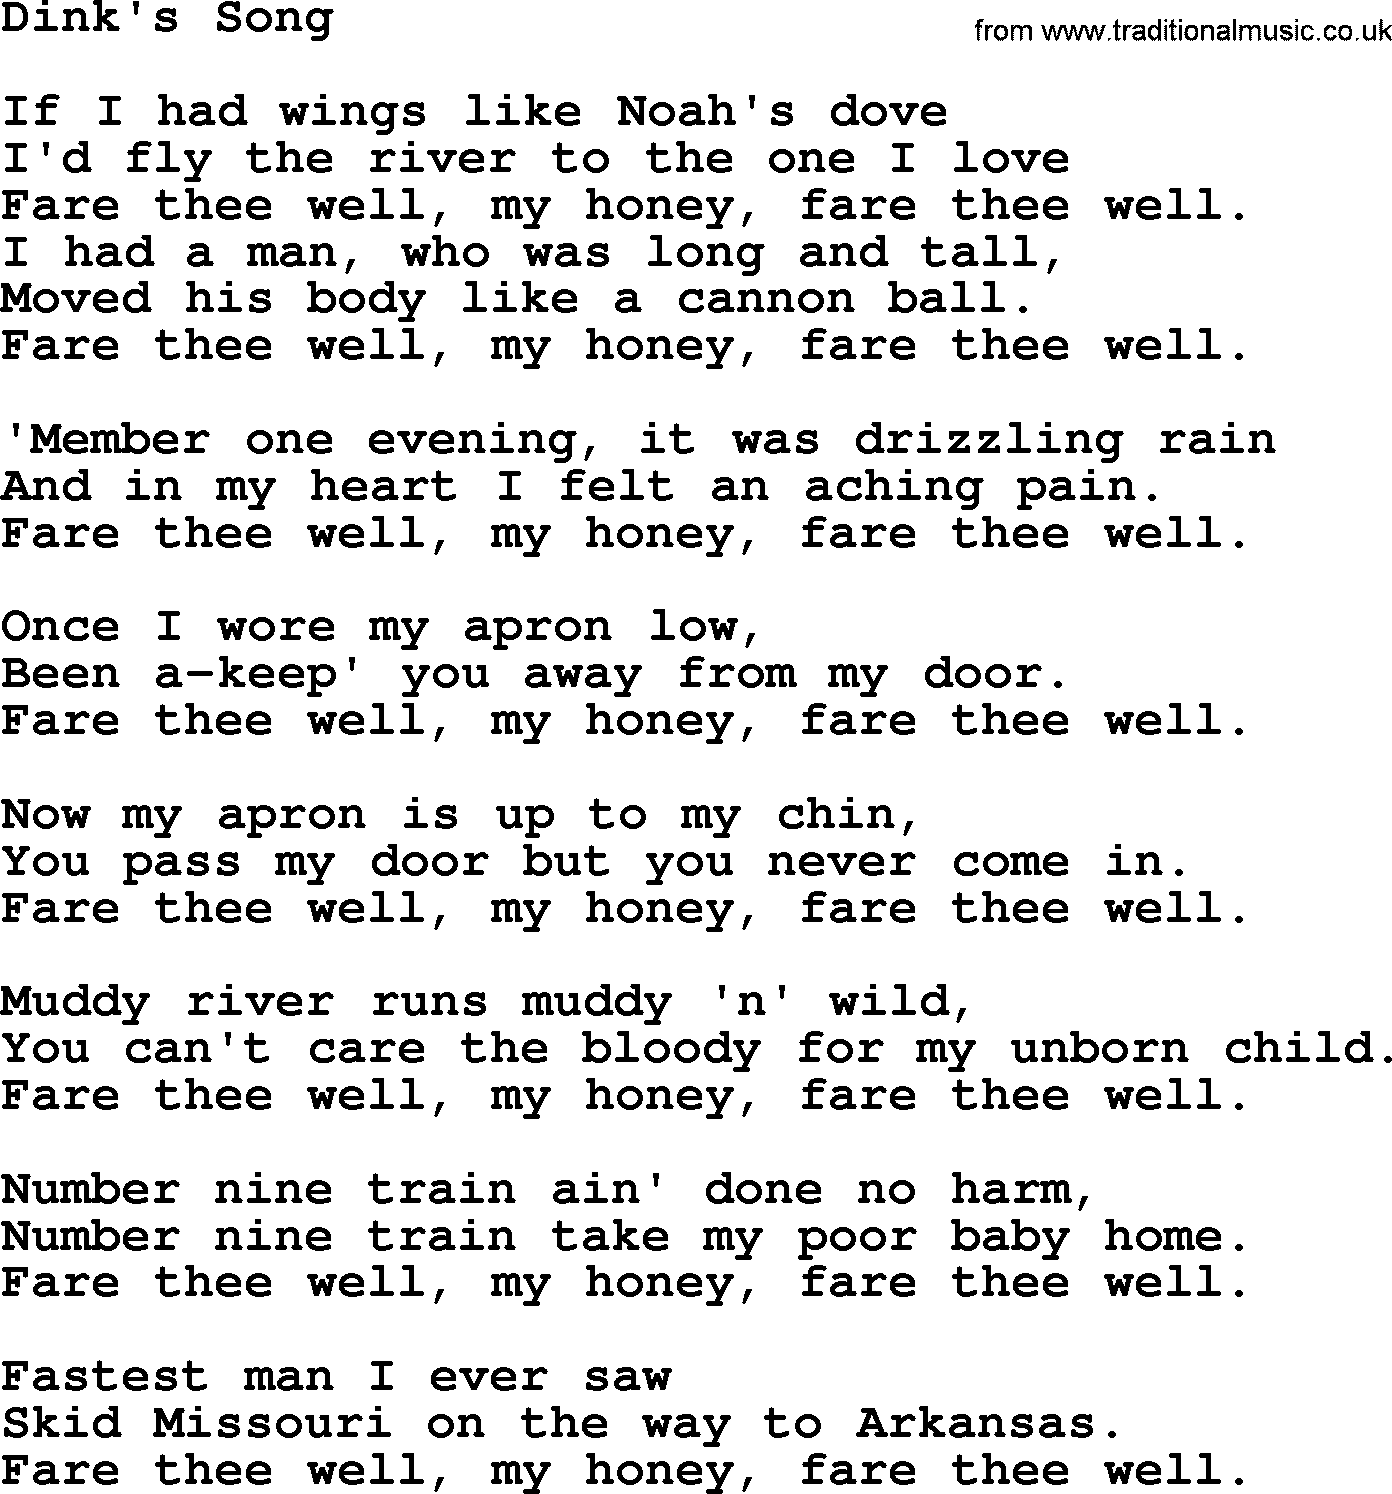 Joan Baez song Dink's Song, lyrics